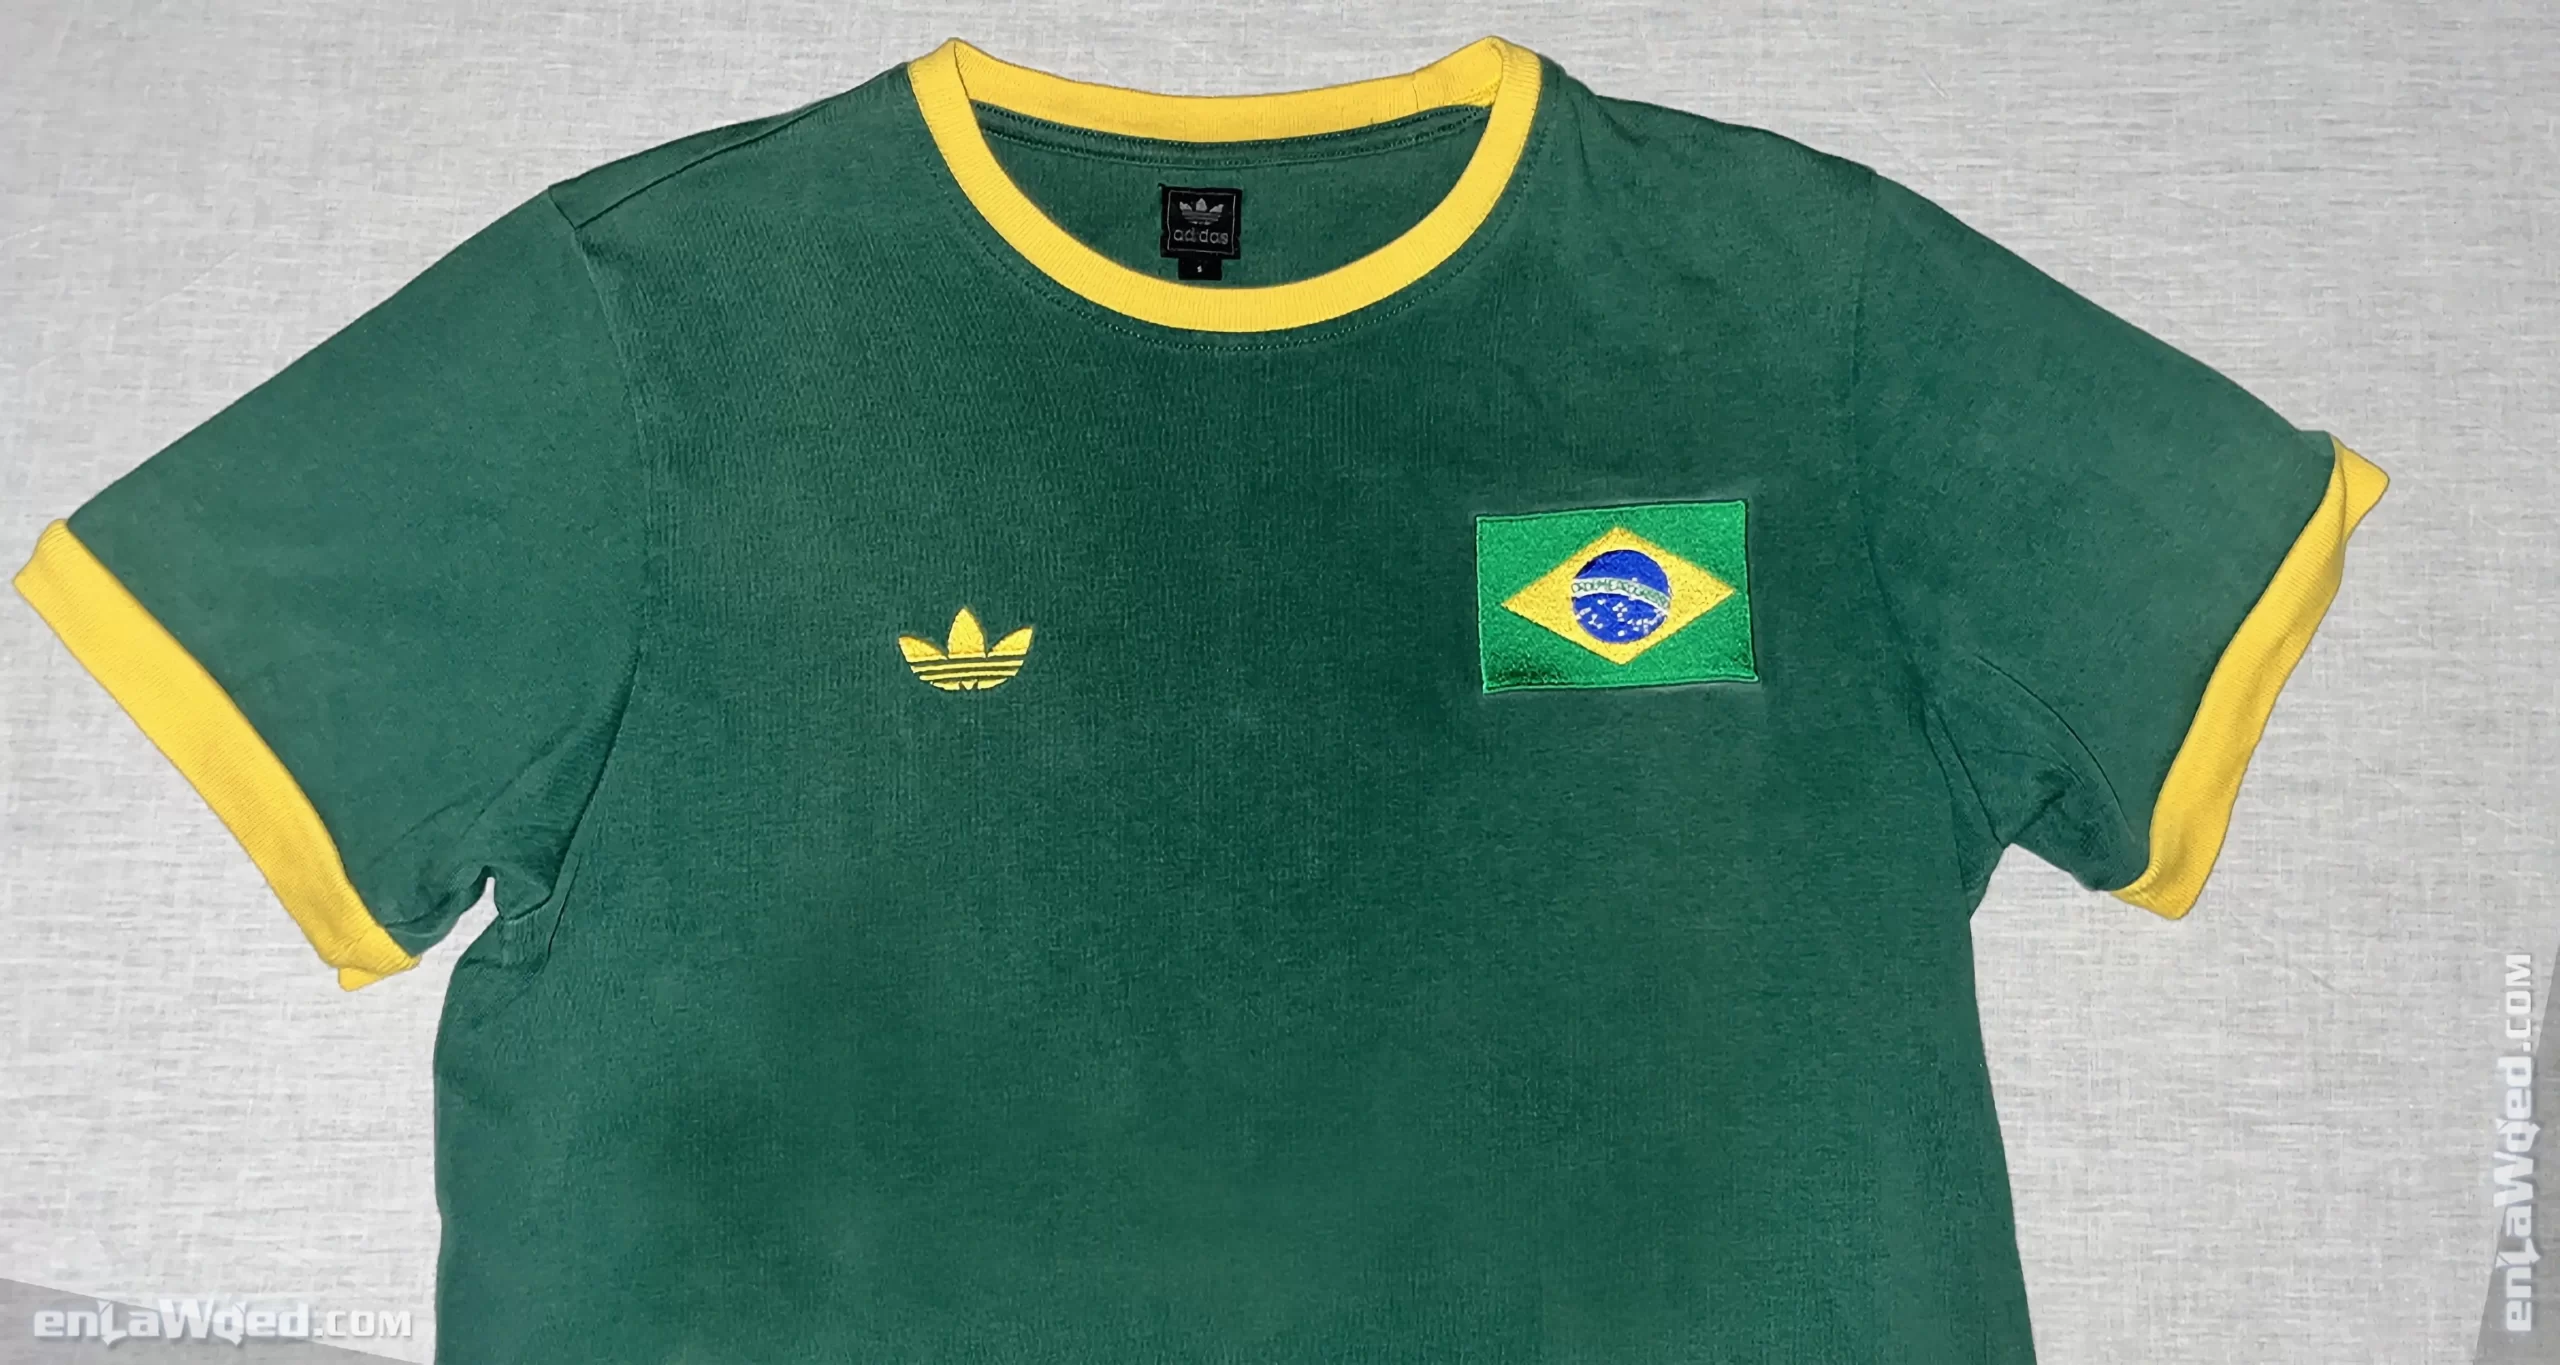 Men’s 2006 Brasil ’70 Green T-Shirt by Adidas Originals: Direct (EnLawded.com file #lp1mecgq126148tittym3byo)